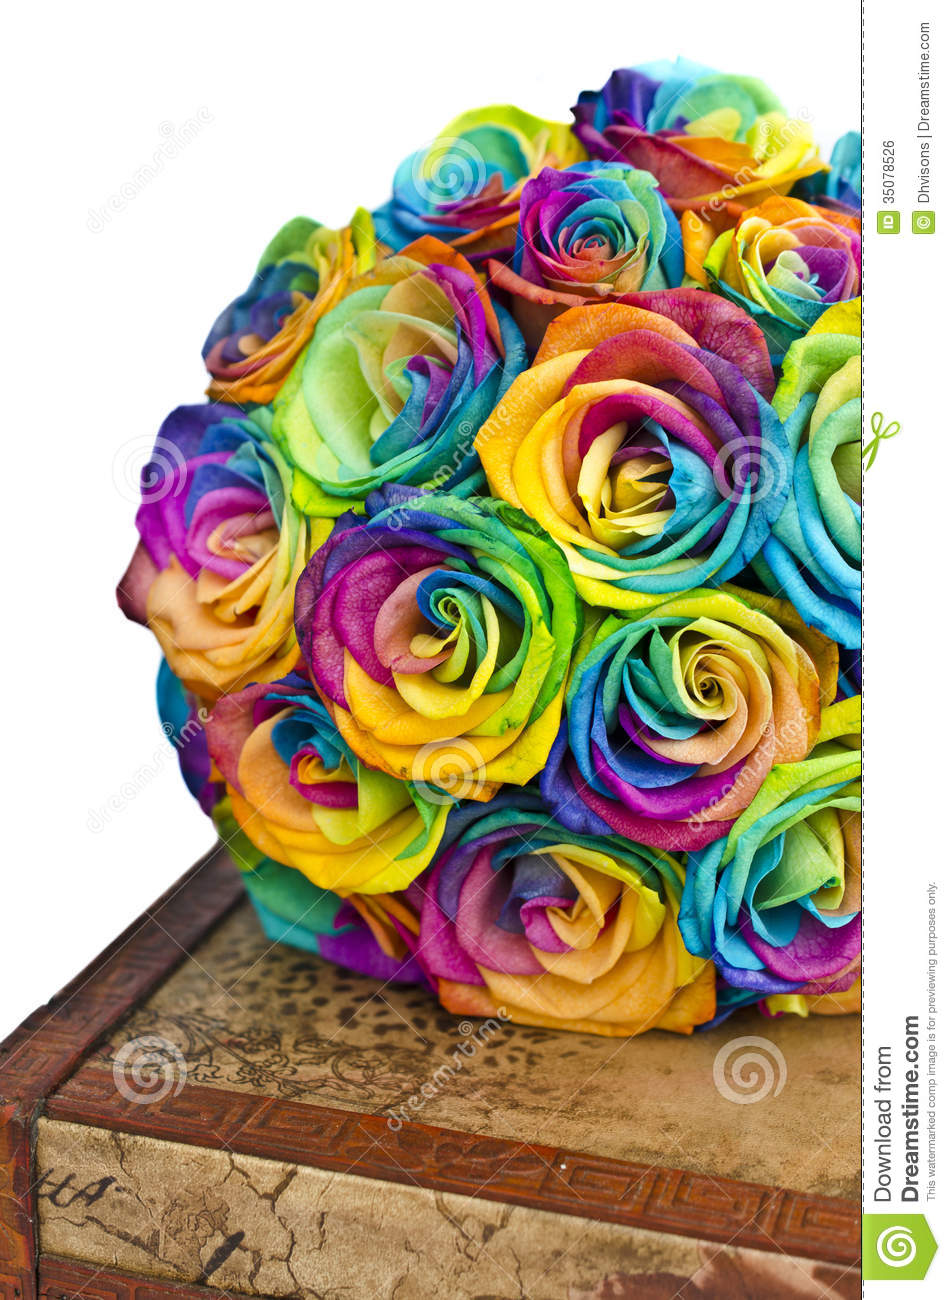 Rainbow Roses Bouquet On Box Royalty Free Stock Image   Image    